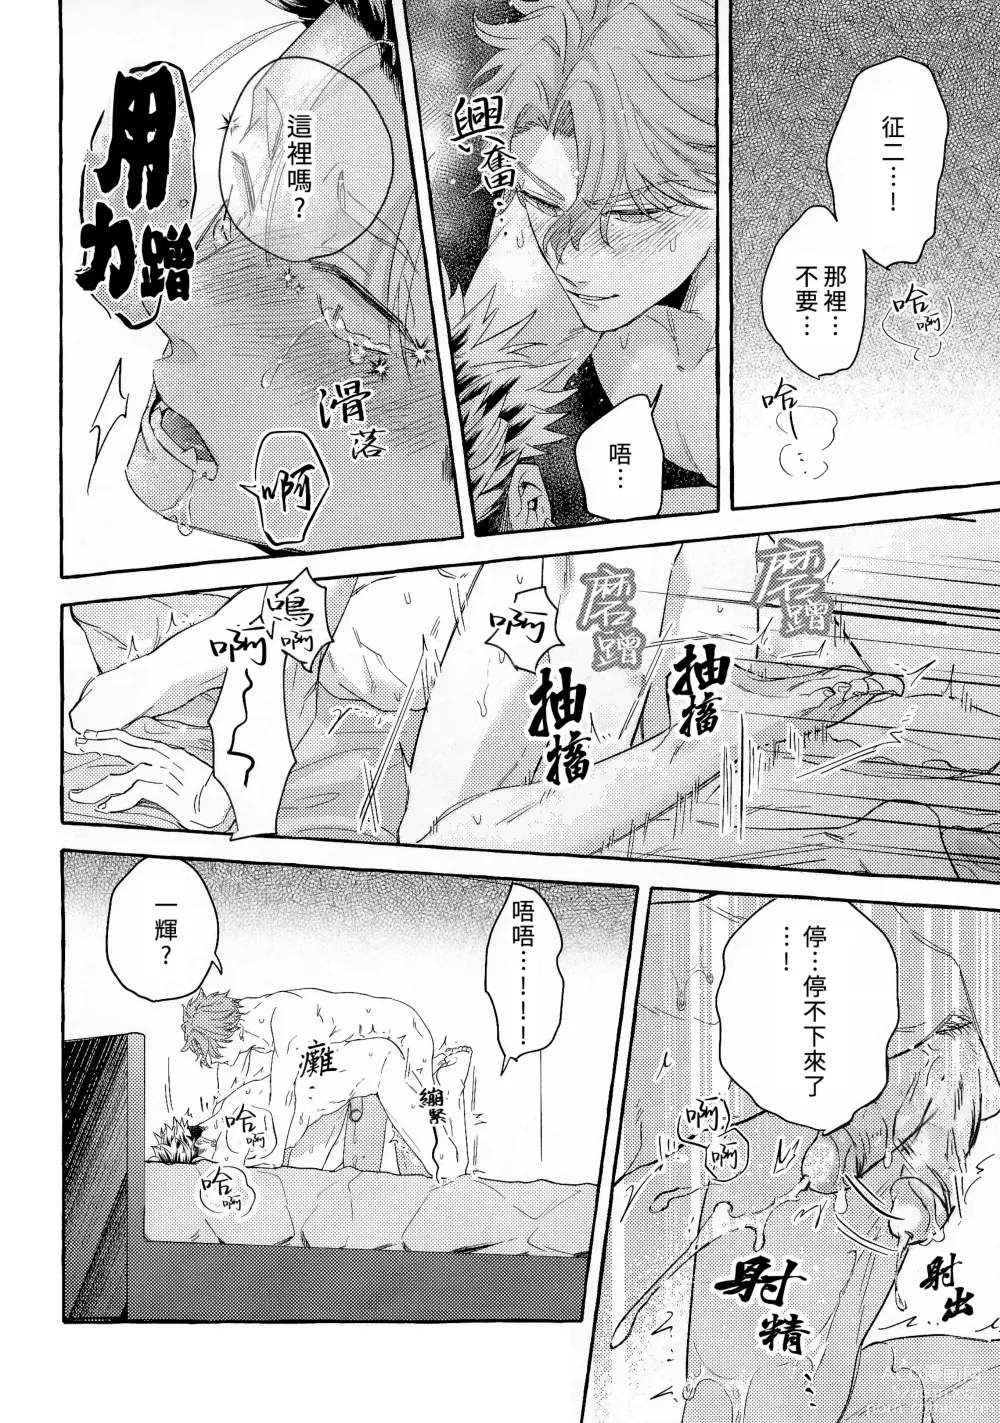 Page 21 of doujinshi skip run!run!run! (uncensored)